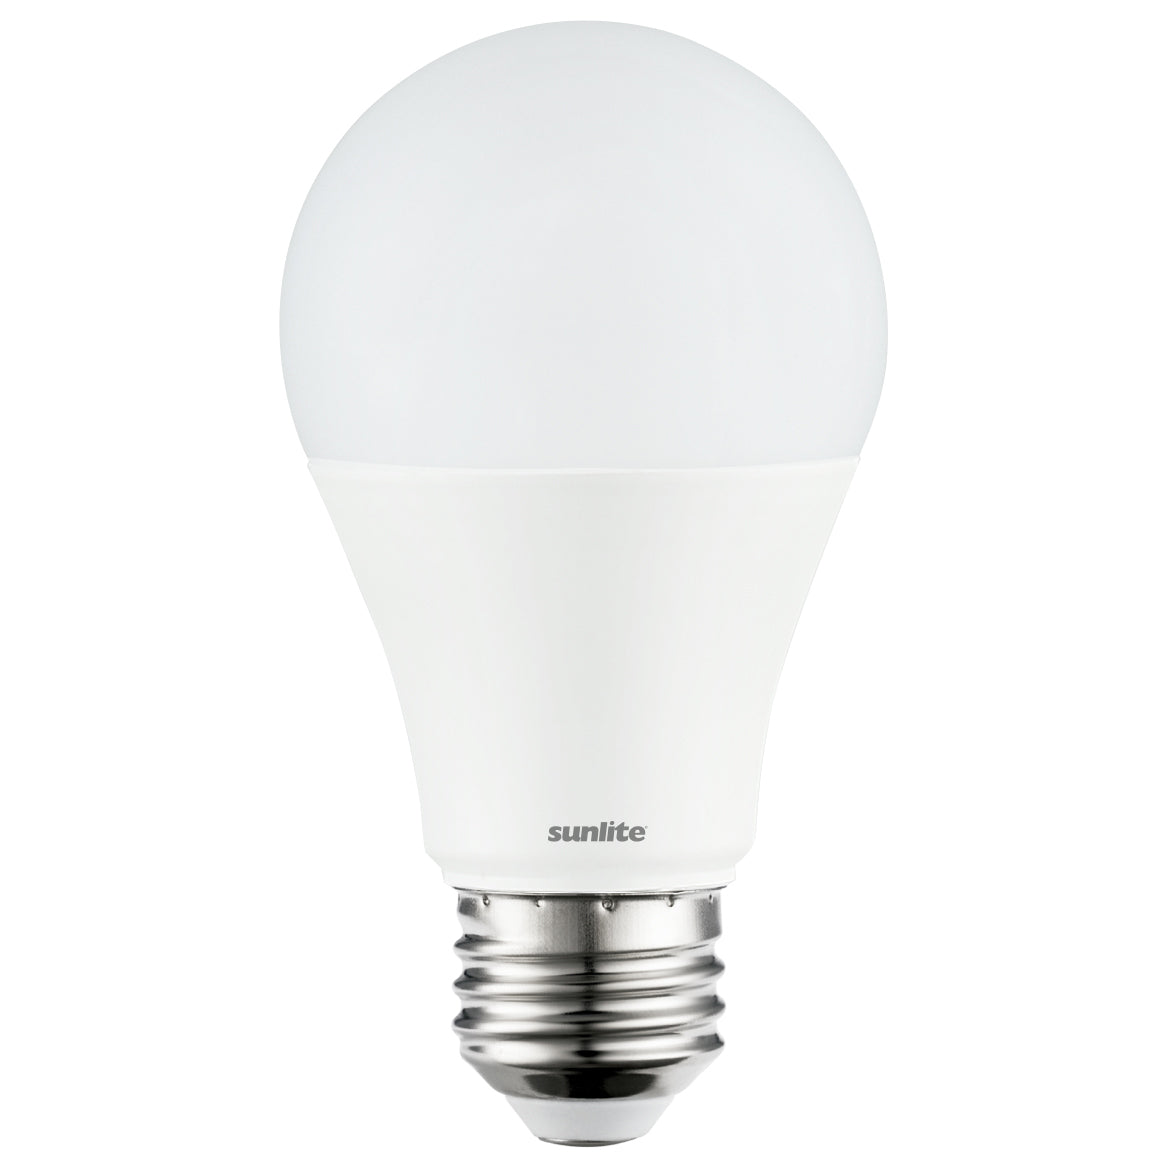 Sunlite 88391-SU LED A19 Standard Light Bulb 9 Watts (60W Equivalent), 800 Lumens, Medium Base (E26), Dimmable, UL Listed, Energy Star, 30K-Warm White, 1 Pack